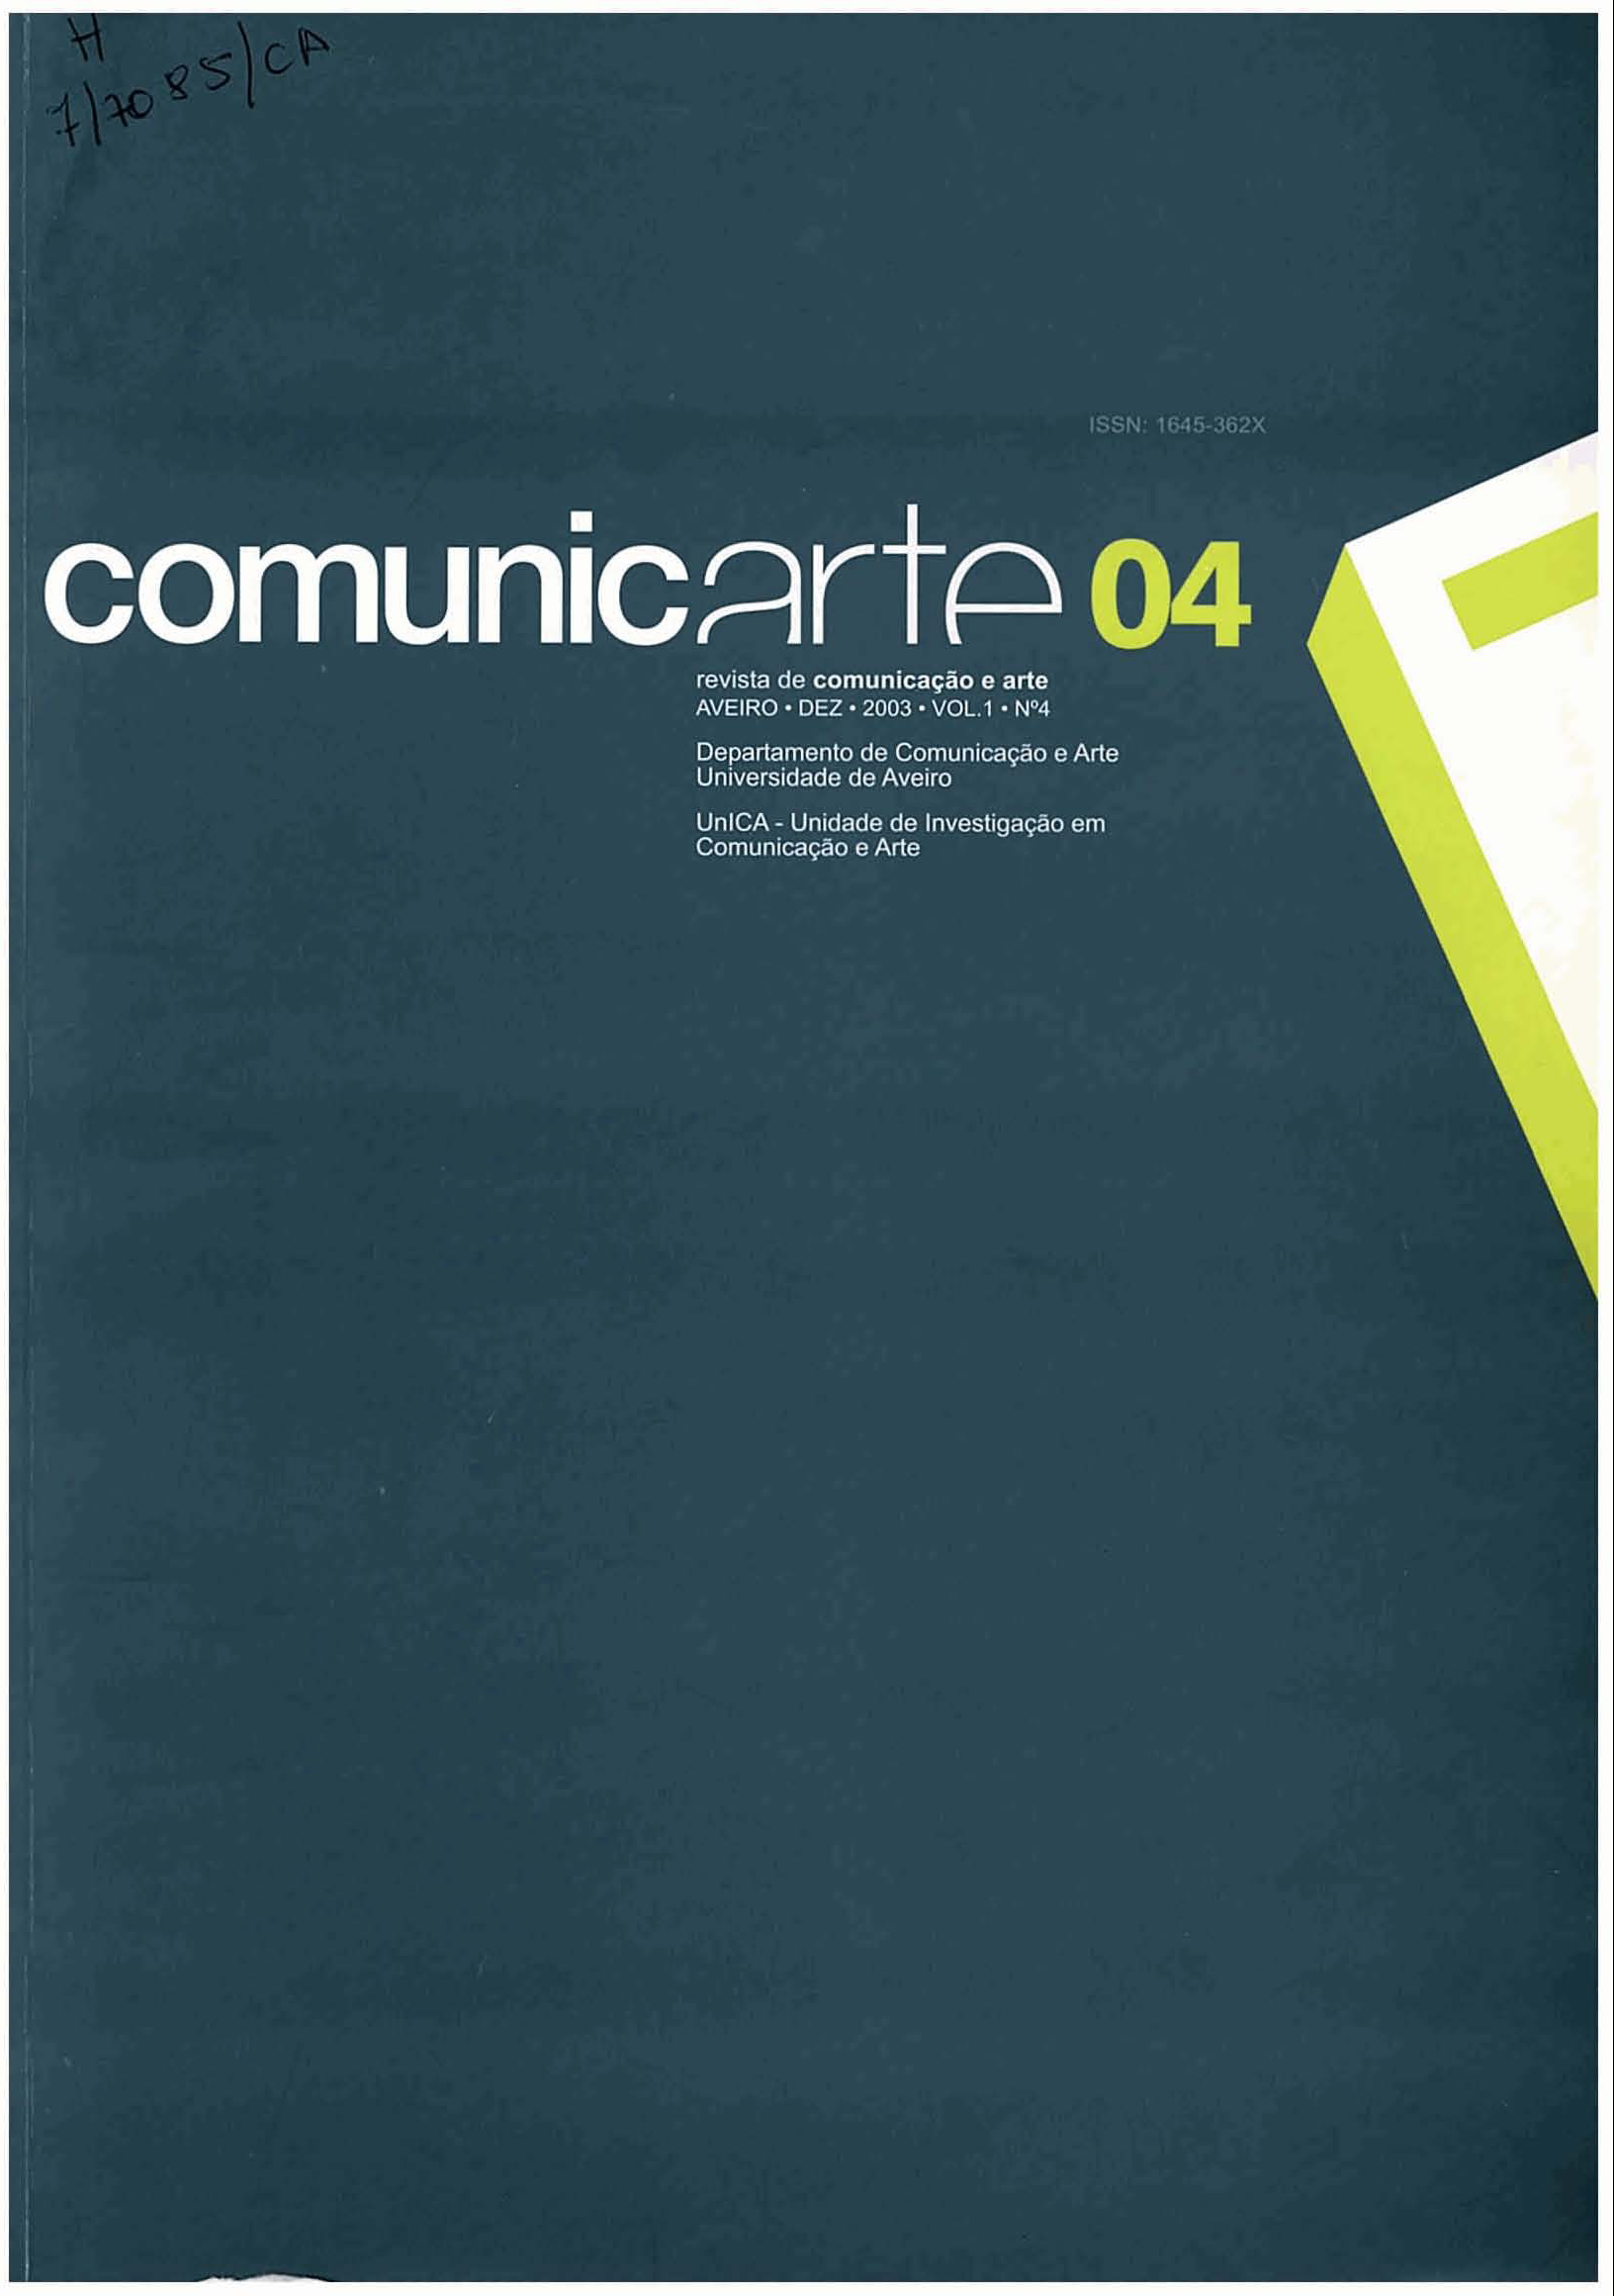 Capa do volume 1, número 4 (2003) da revista Comunicarte